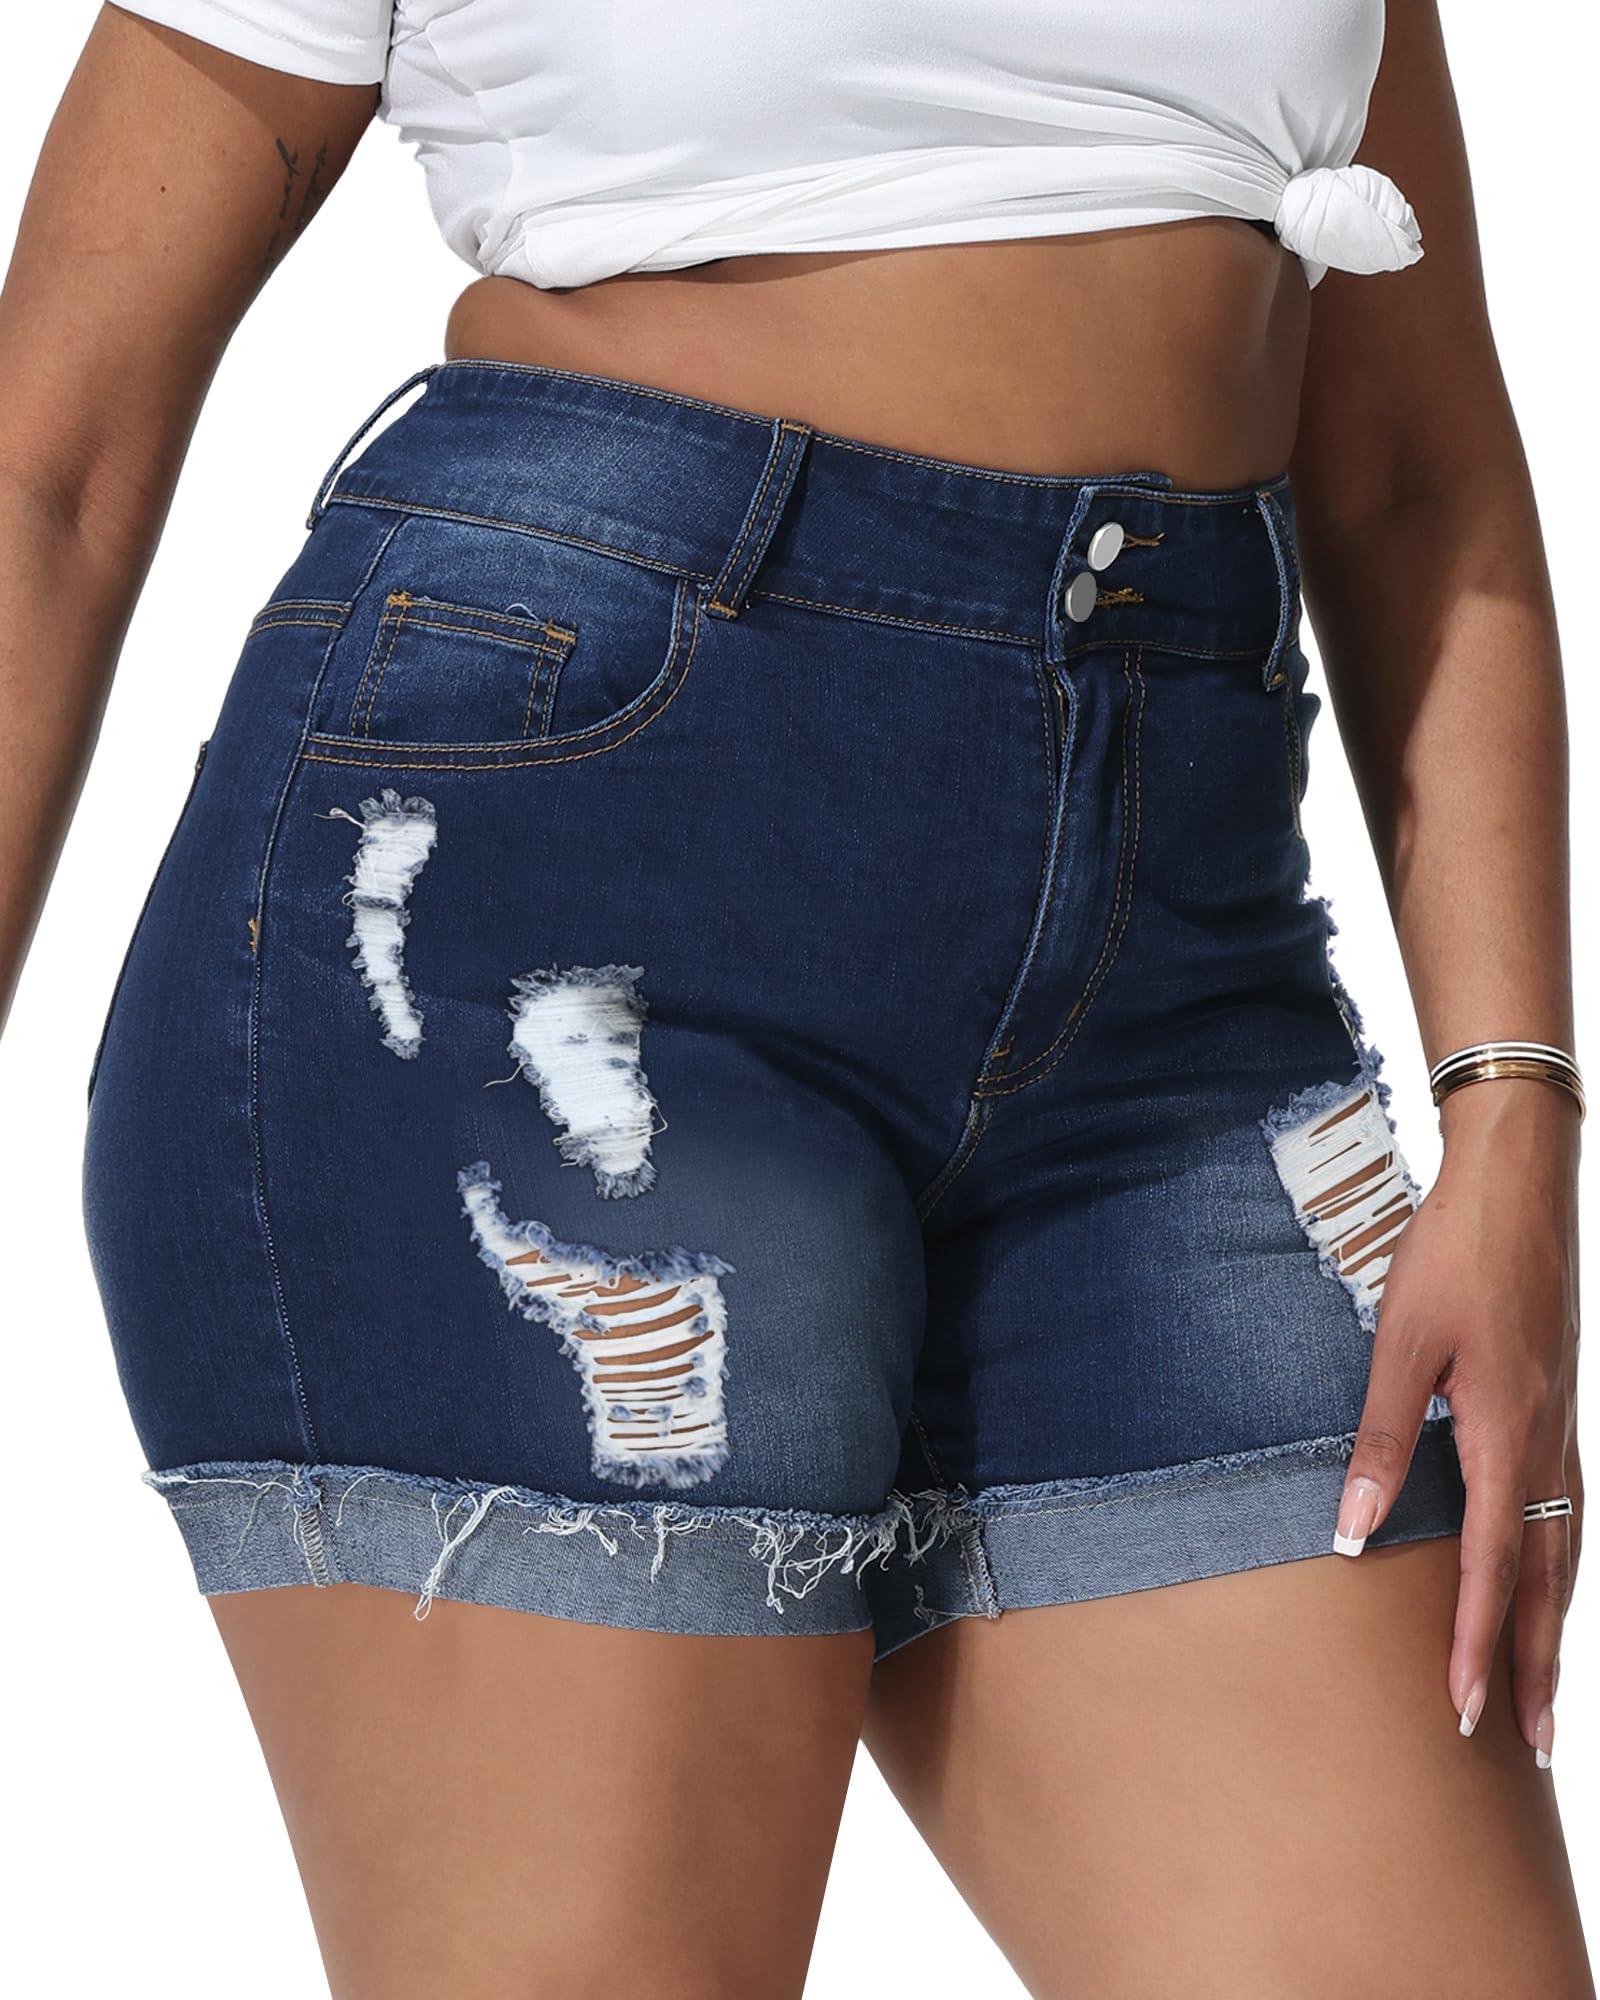 Rubugil Plus Size Denim Shorts Women High Waisted Distressed Jean Shorts Casual Ripped Raw Fold Hem Short Jeans #3 Dark Blue 26W - Bona Fide Fashion